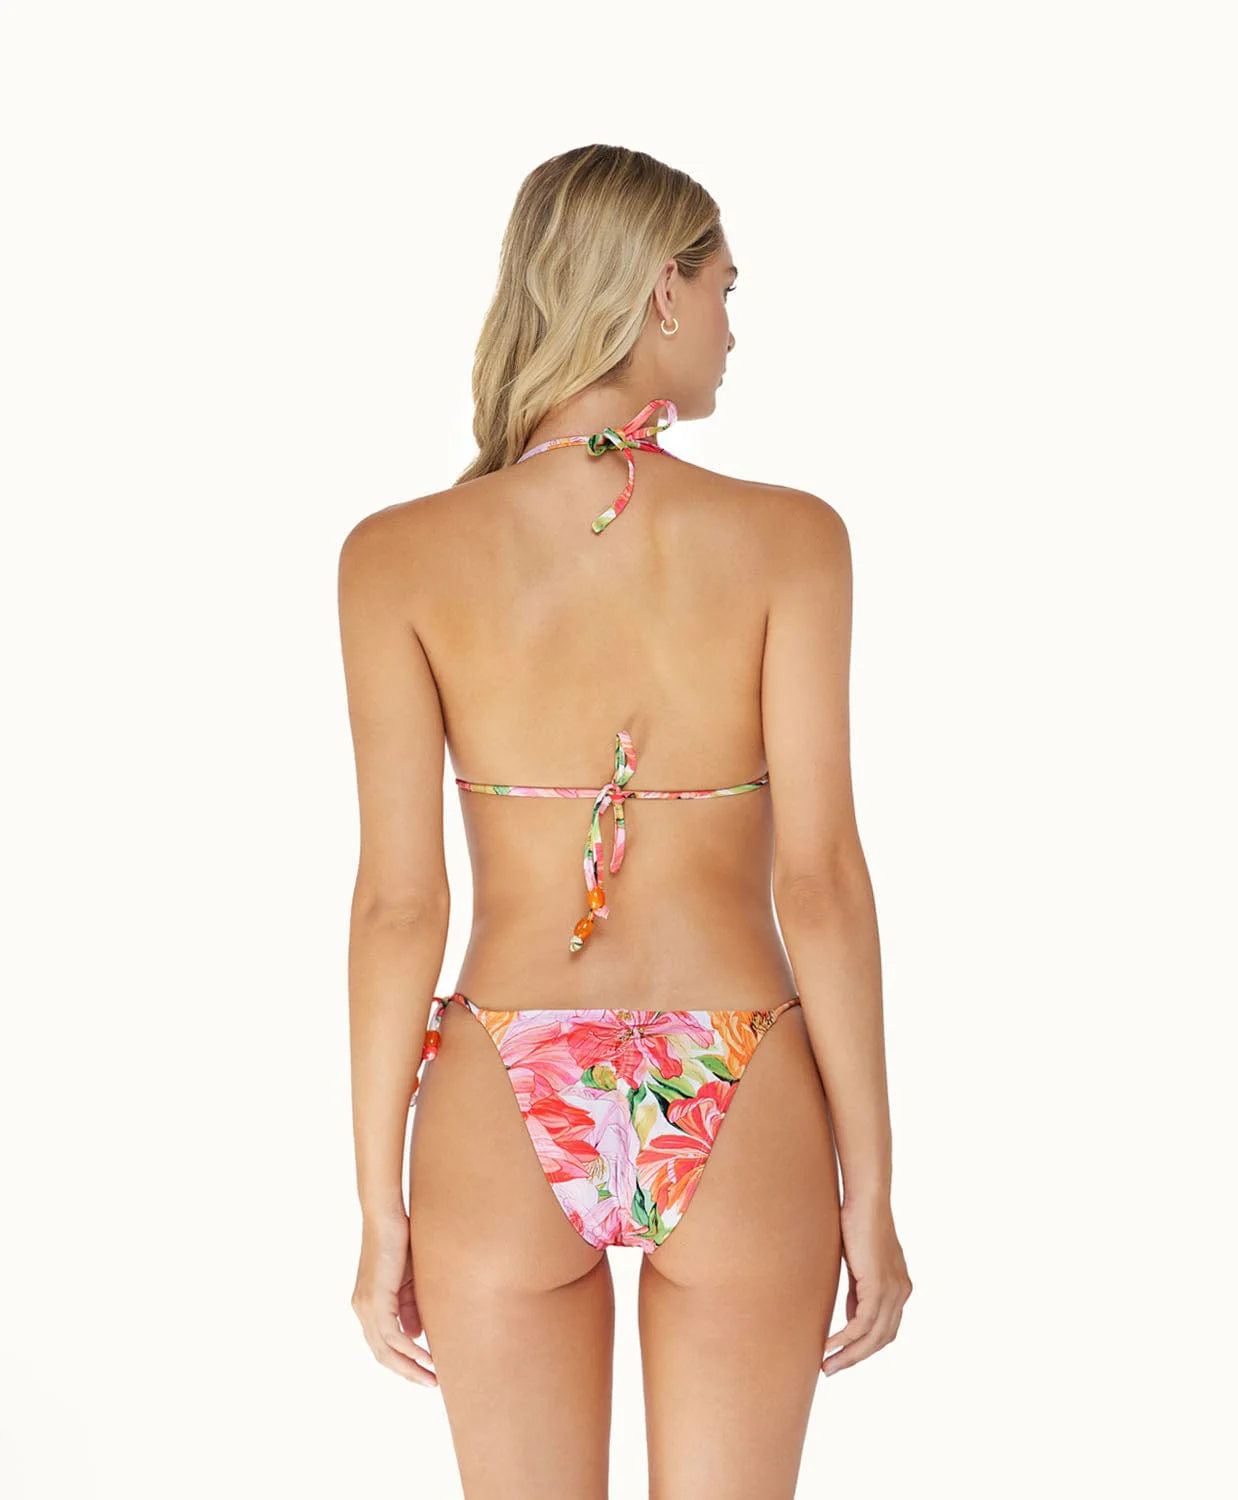 flora tie bikini bottom back view